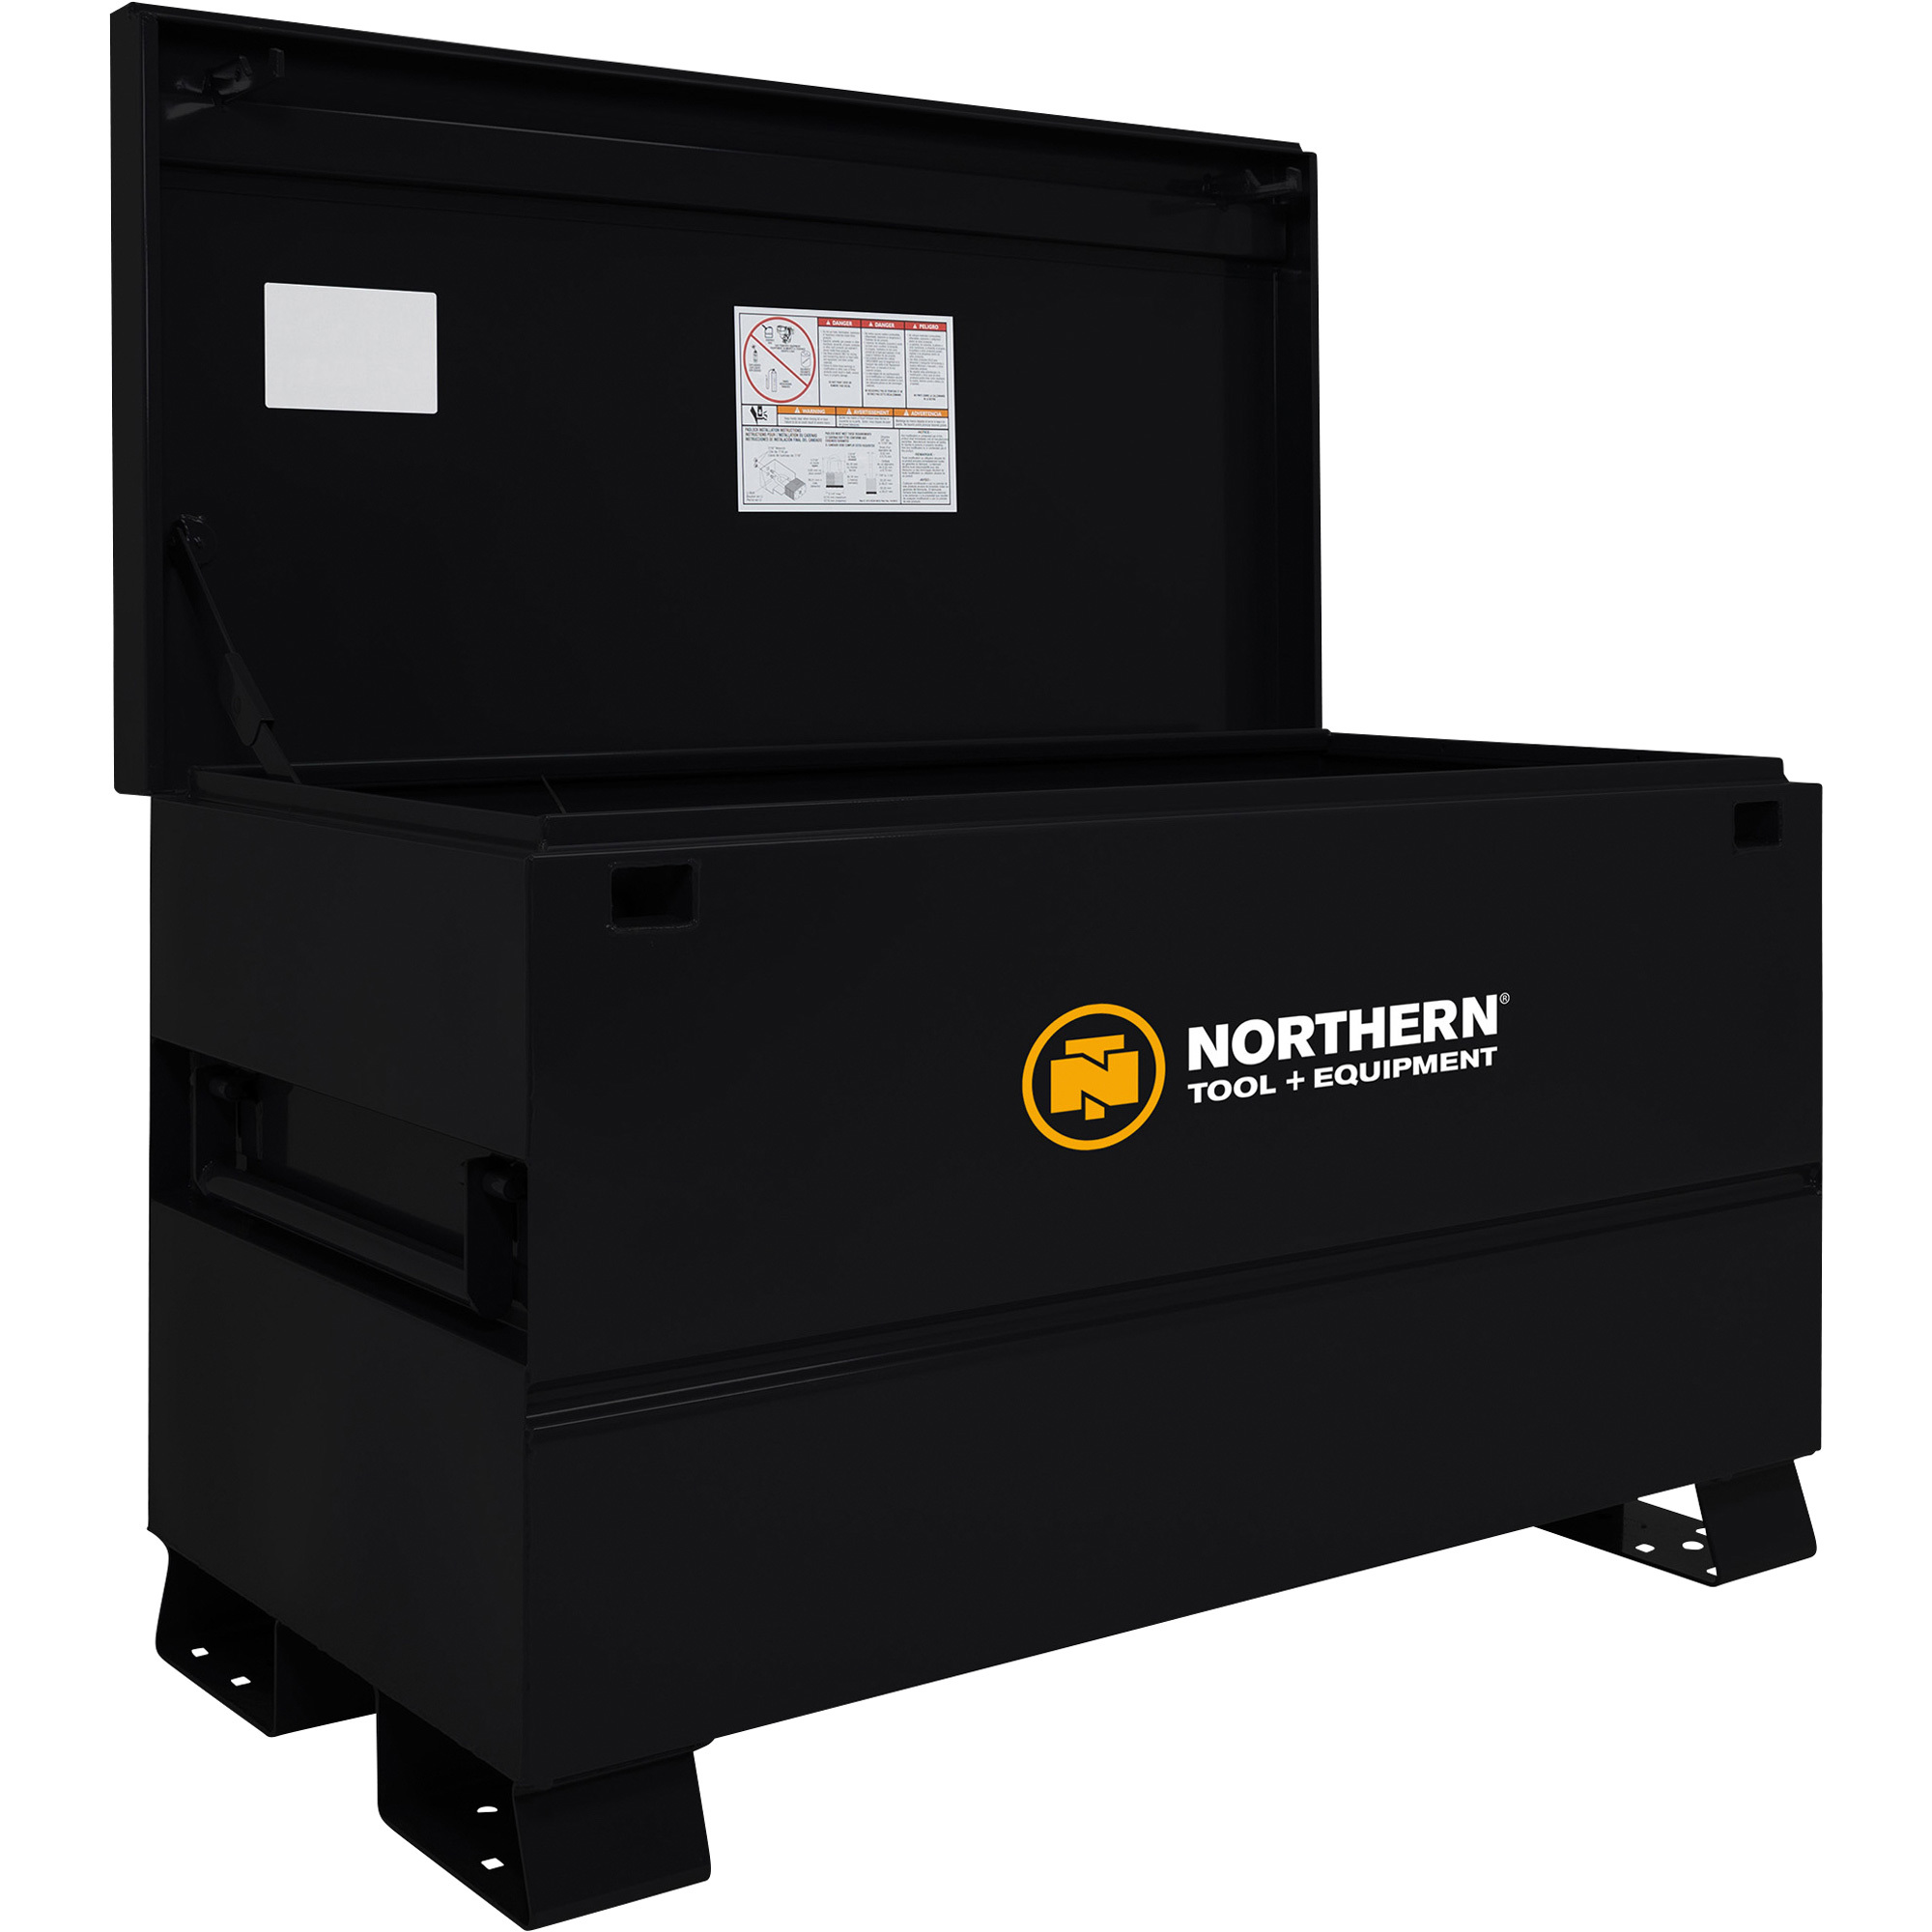 Northern Tool + Equipment 48Inch Jobsite Box, Black, 48Inch W x 24Inch D x 28Inch H, Model 2048-NTE